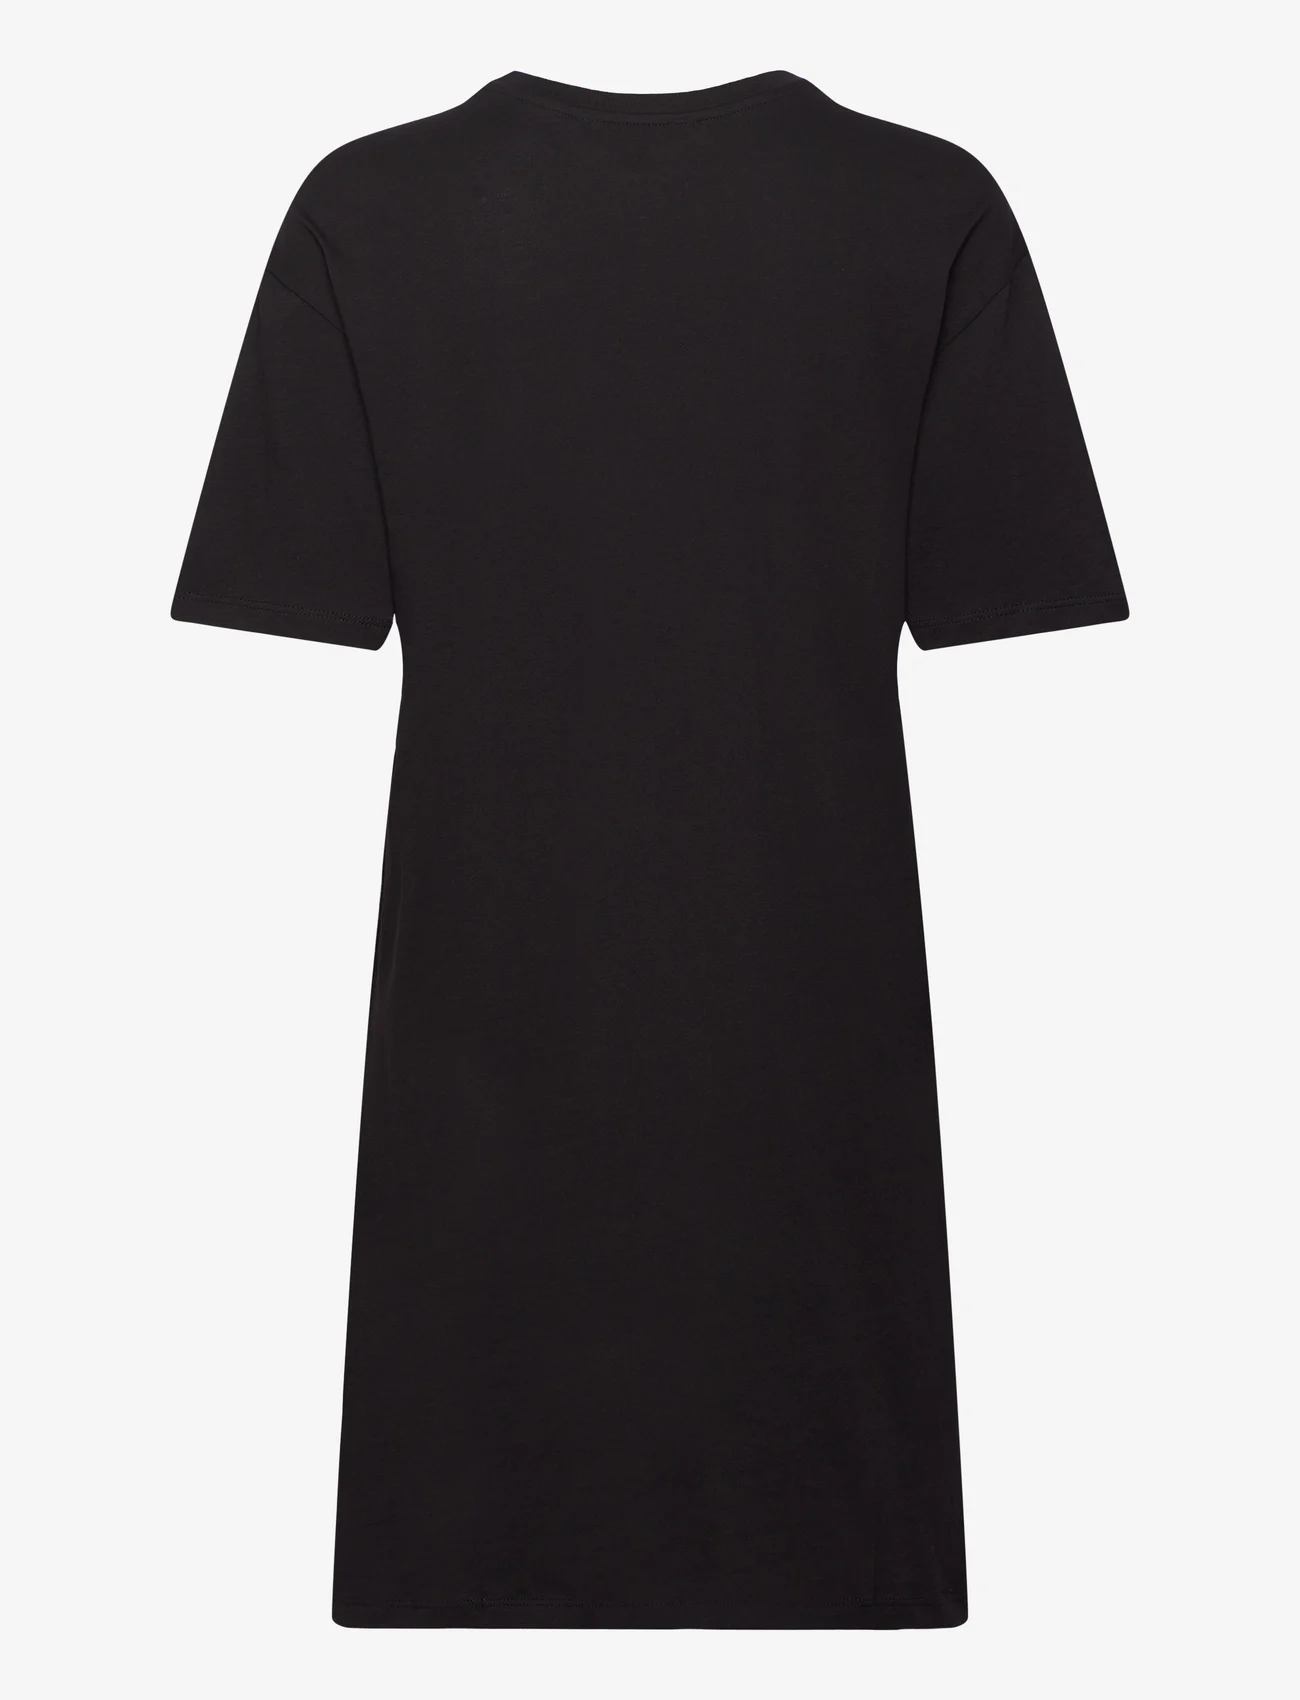 Armani Exchange - DRESS - t-shirt dresses - 1200-black - 1